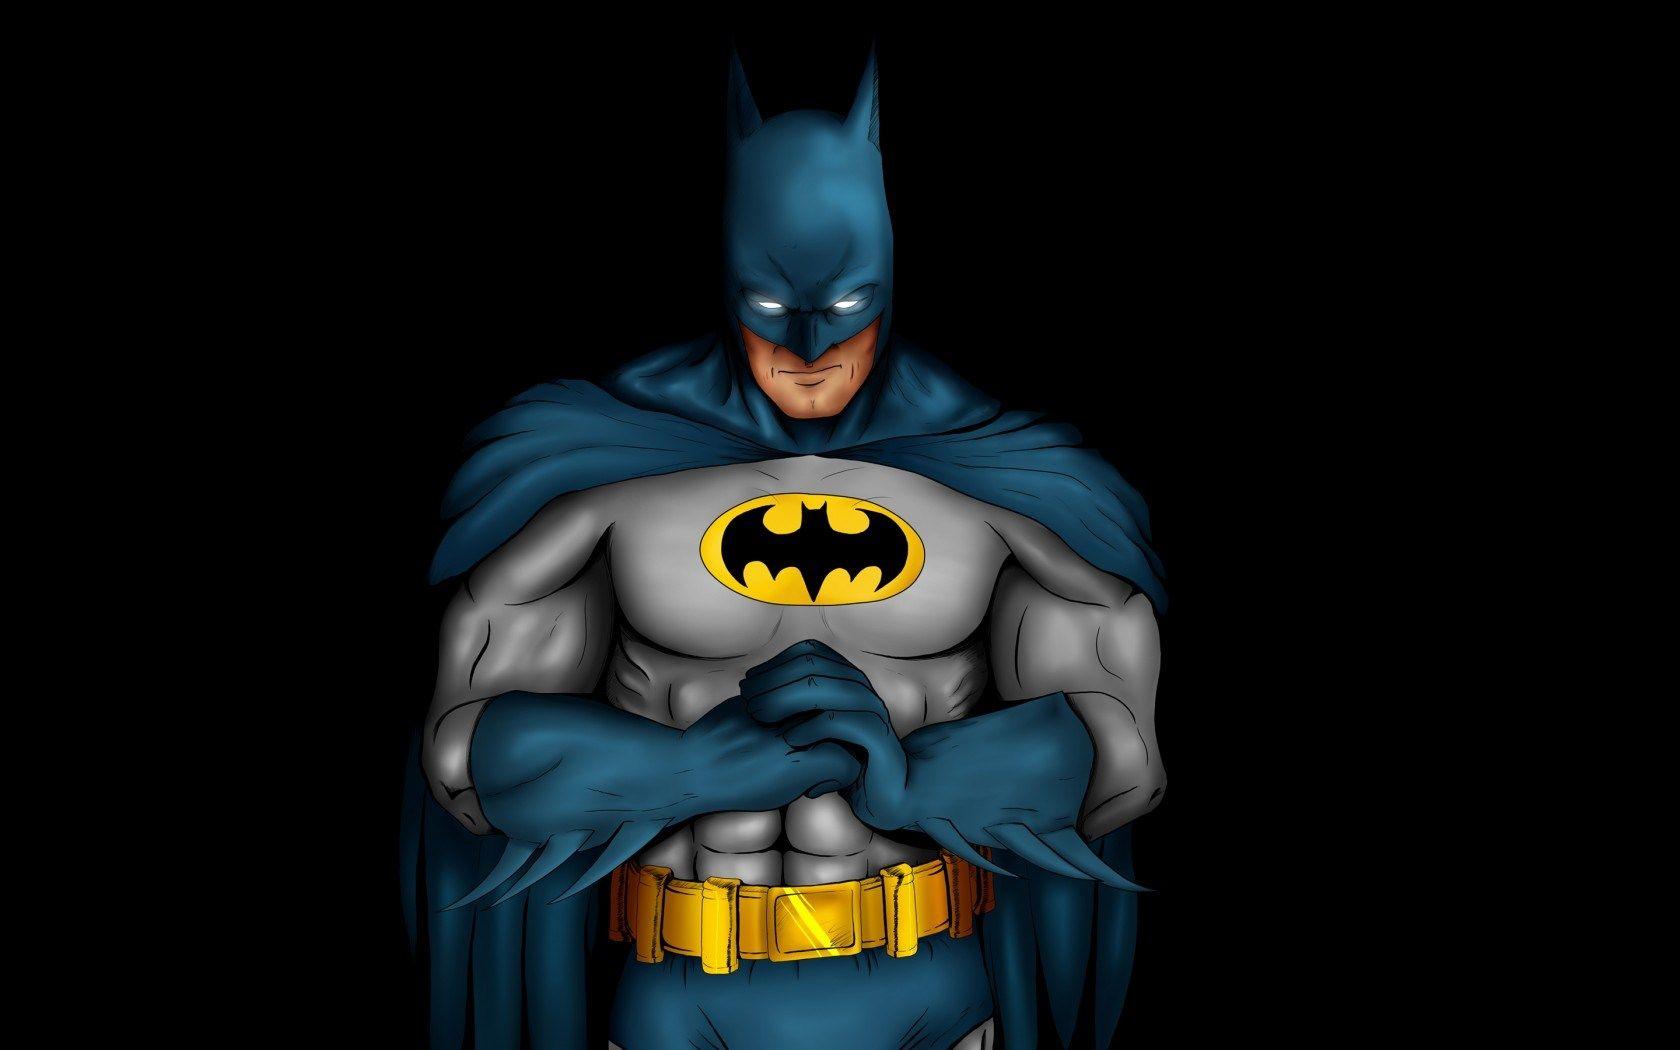 Batman animated wallpaper